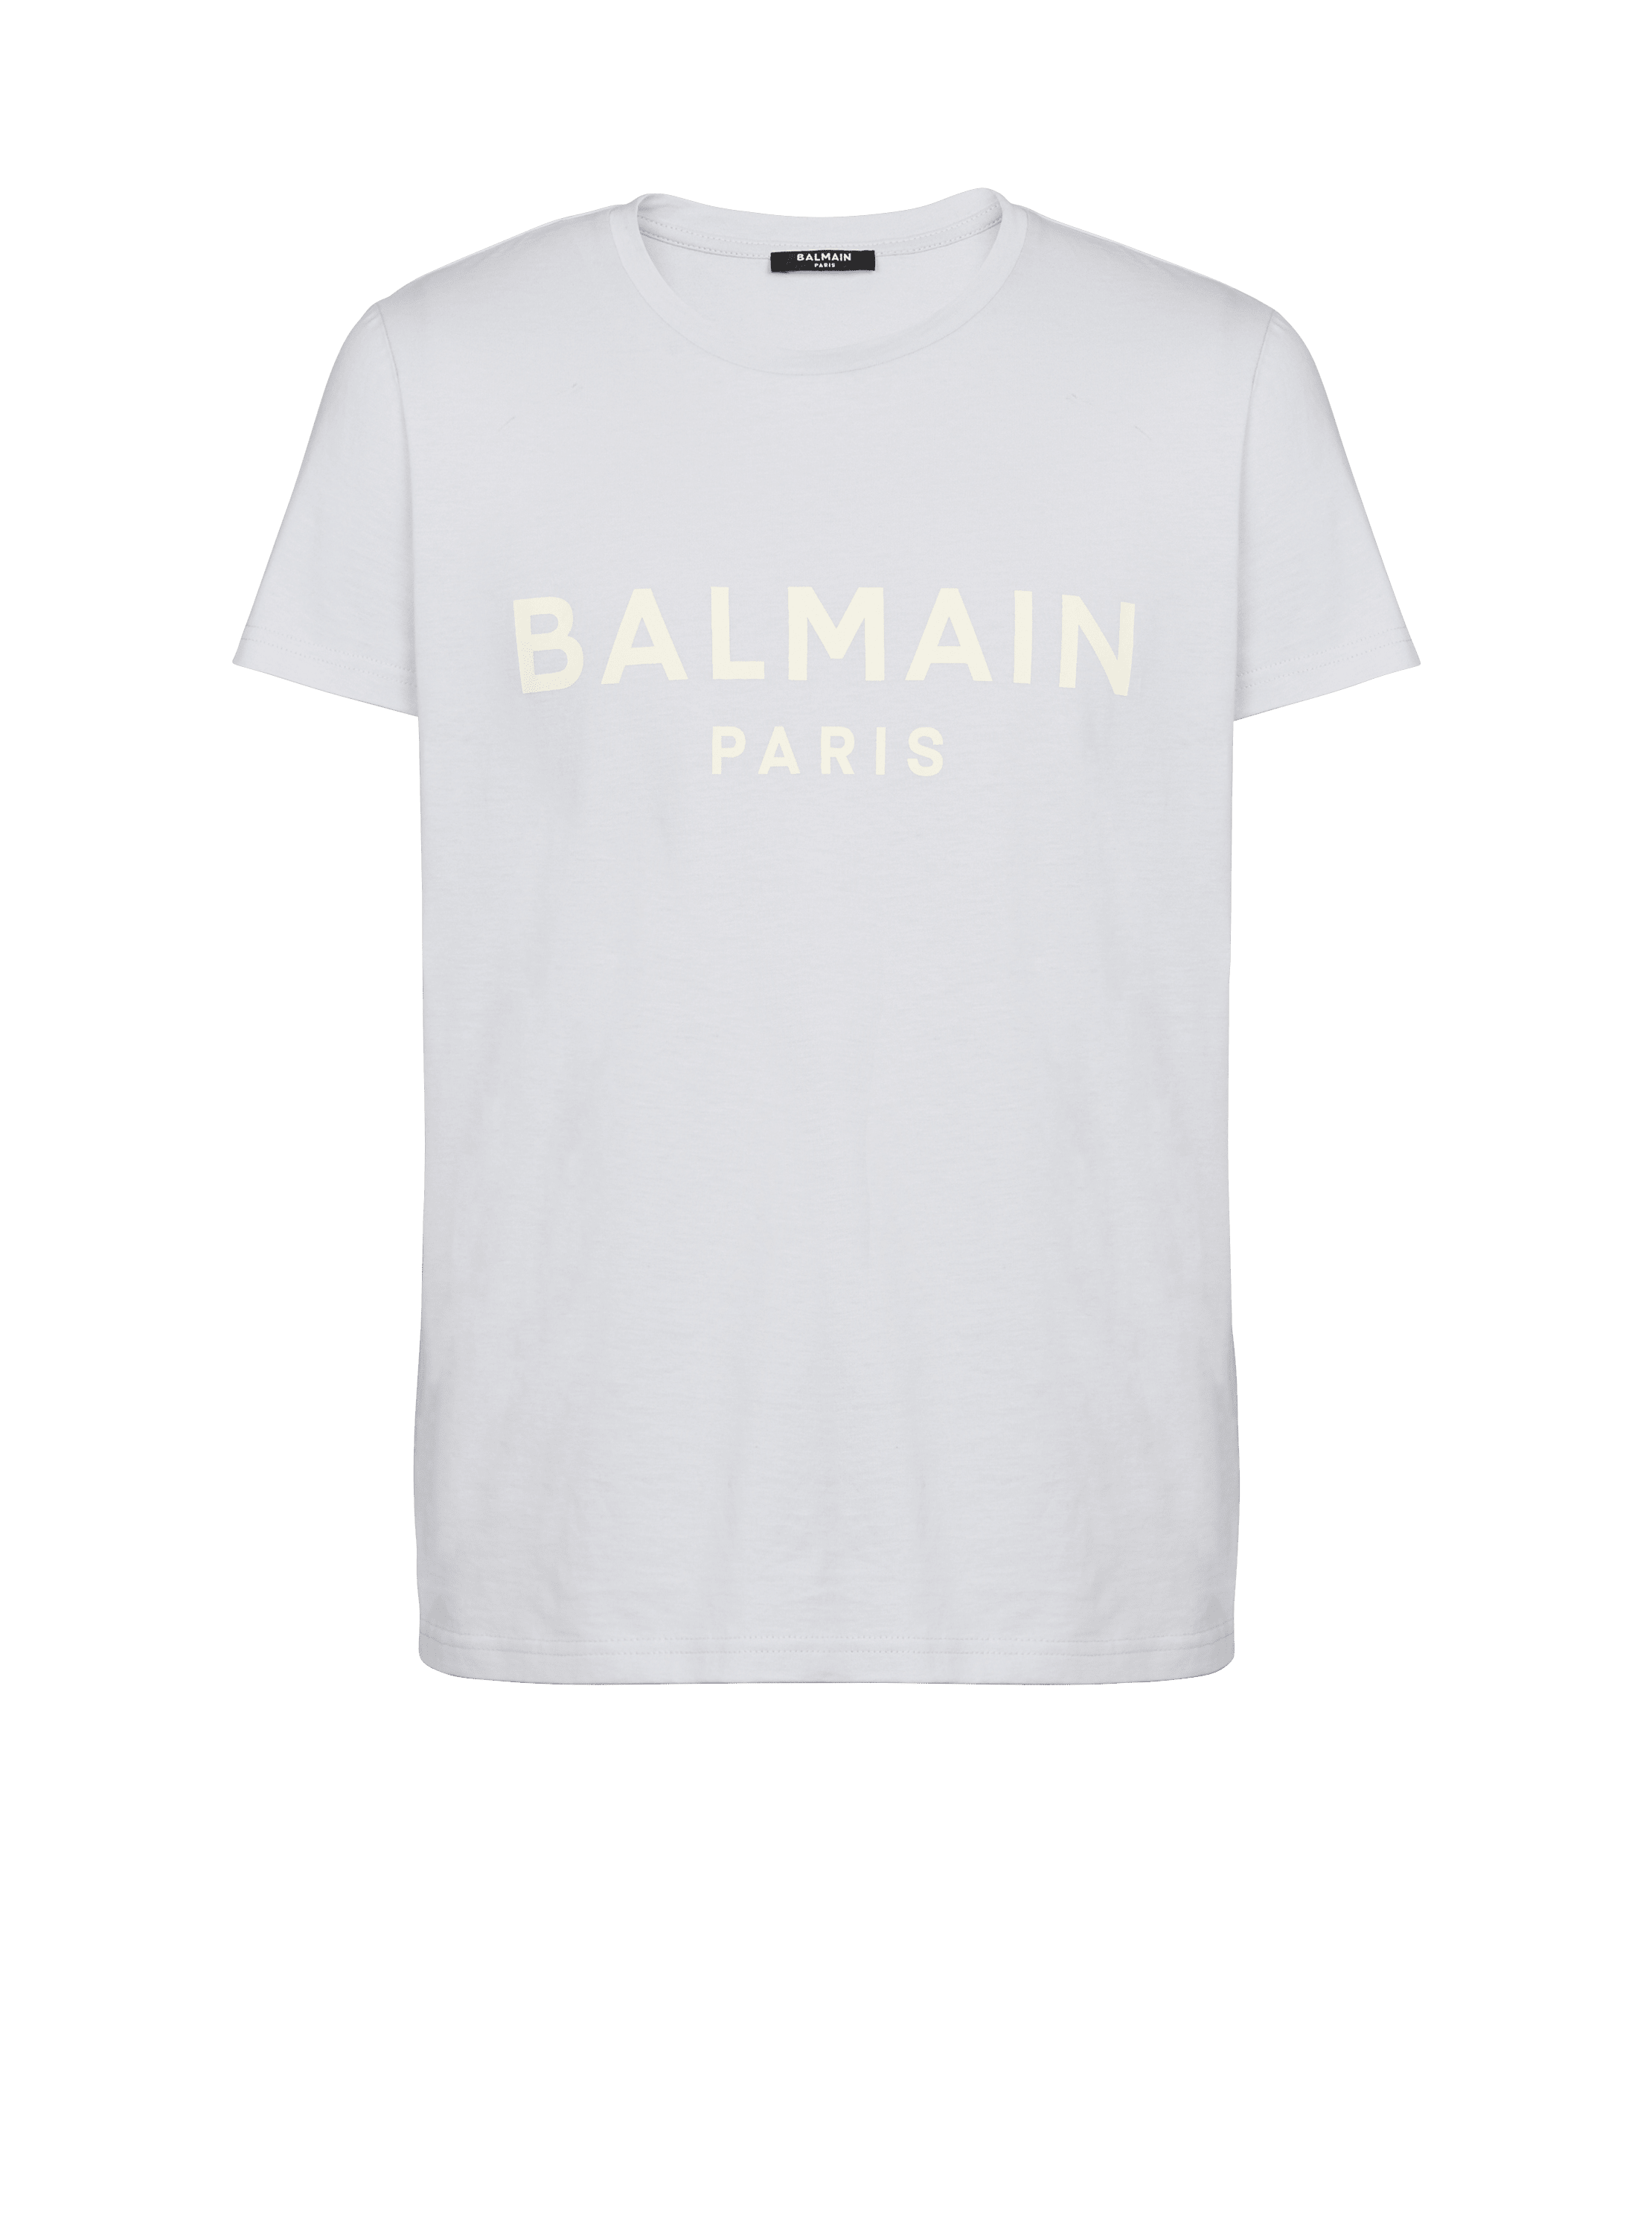 Cotton printed Balmain Paris logo T-shirt